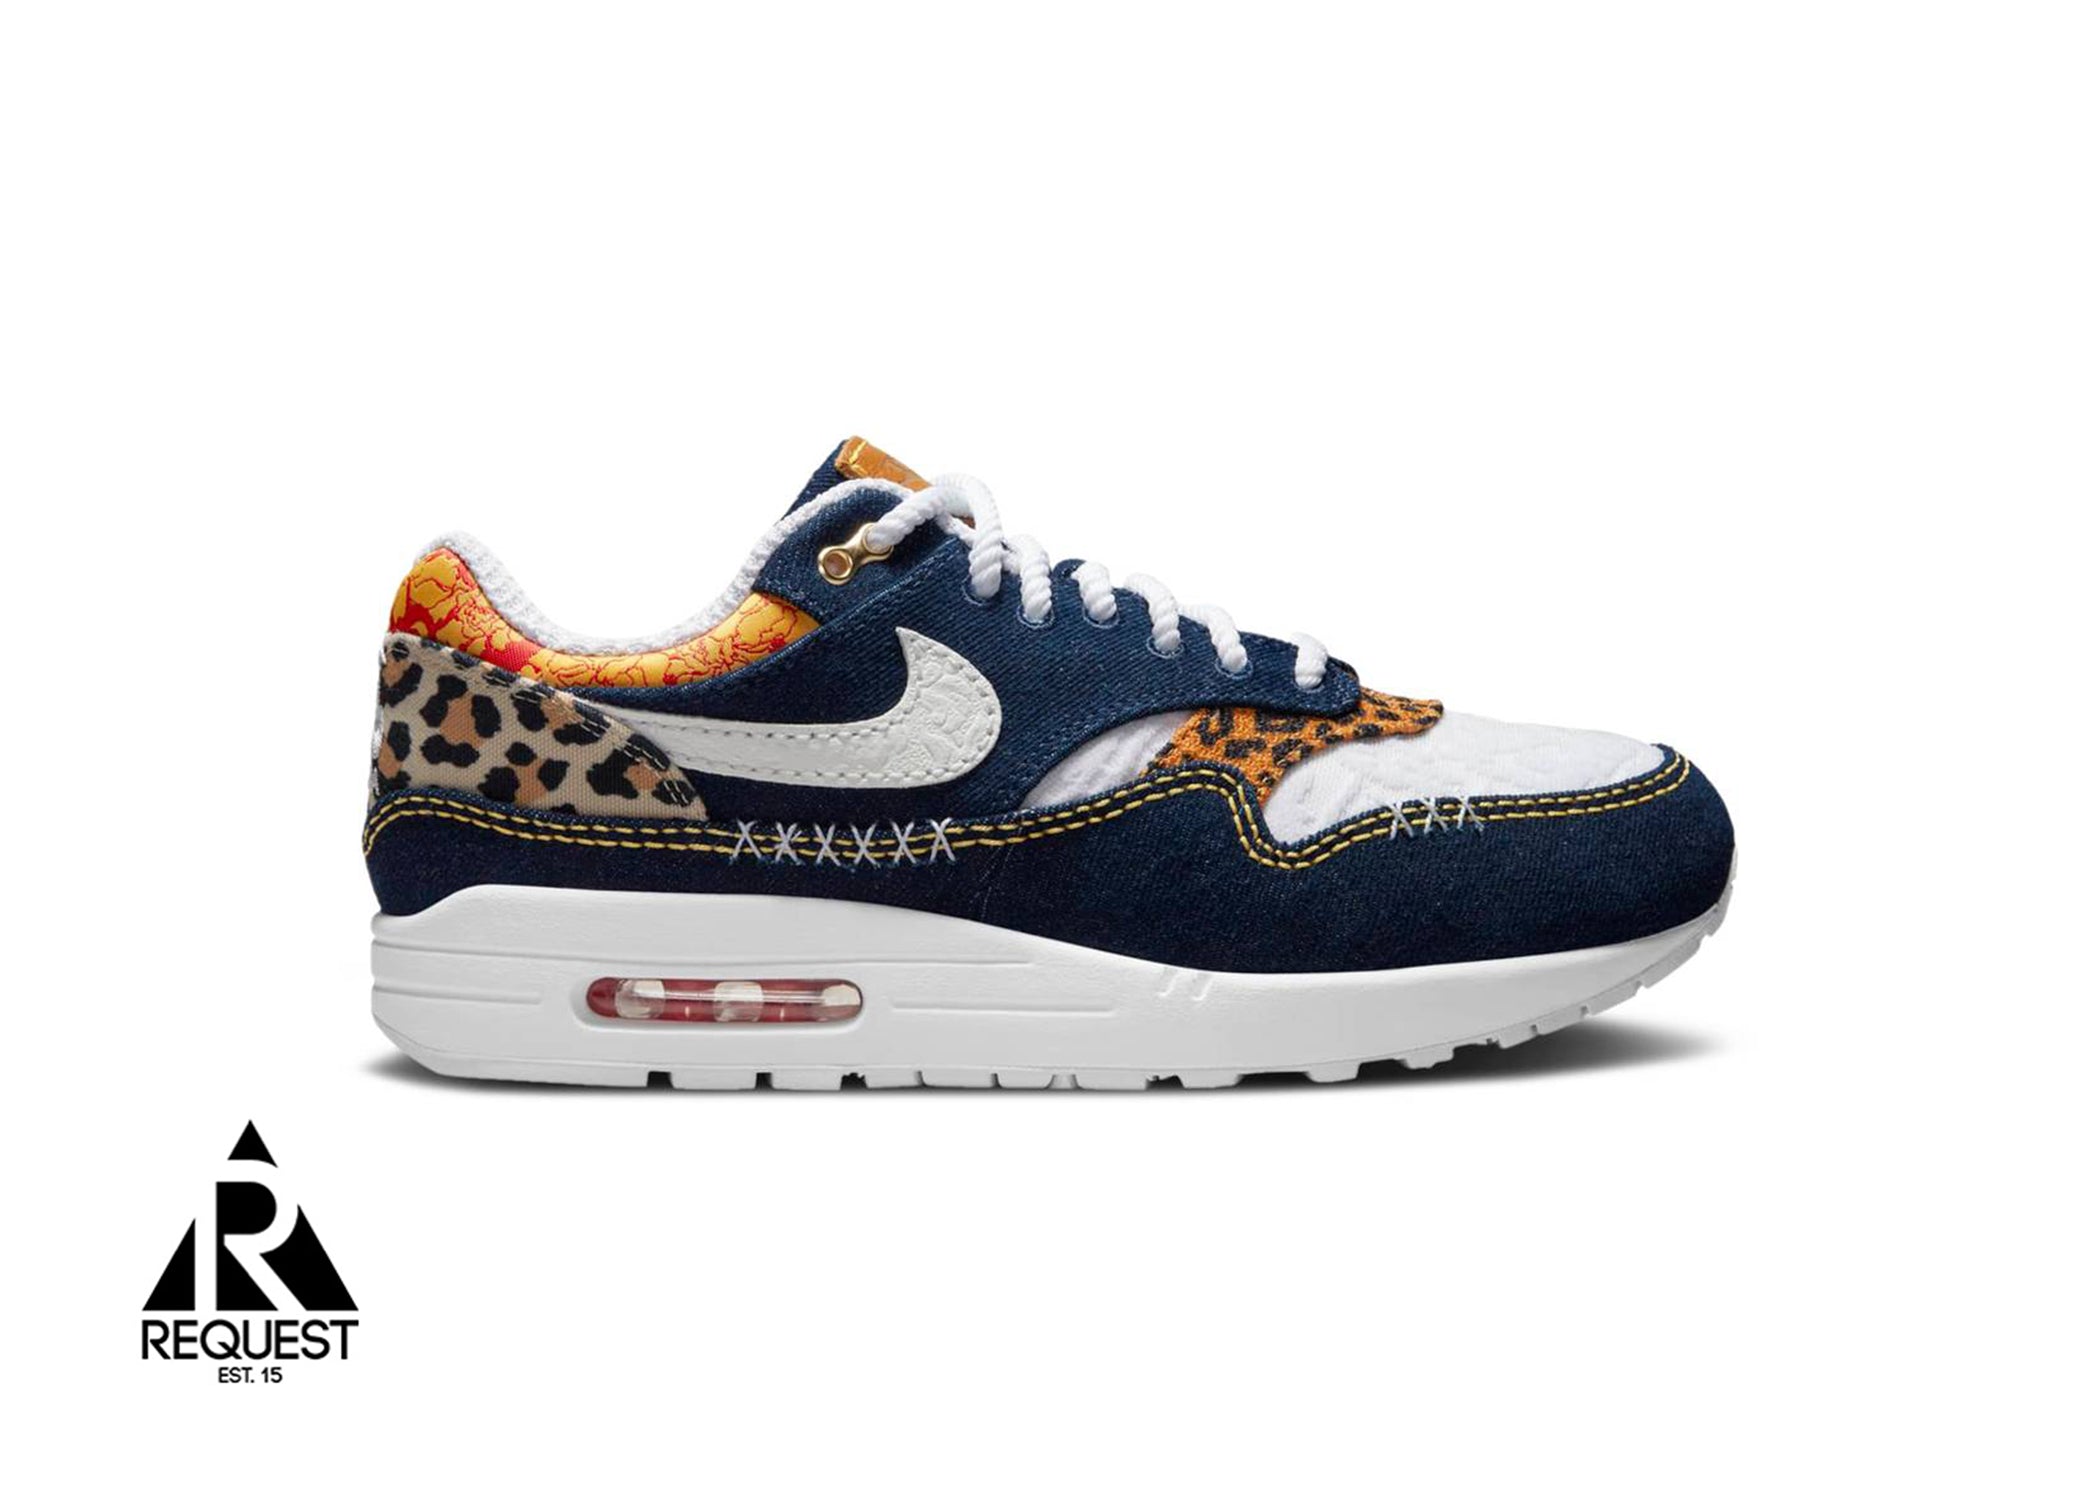 Nike Air Max 1 Premium "Denim Leopard"